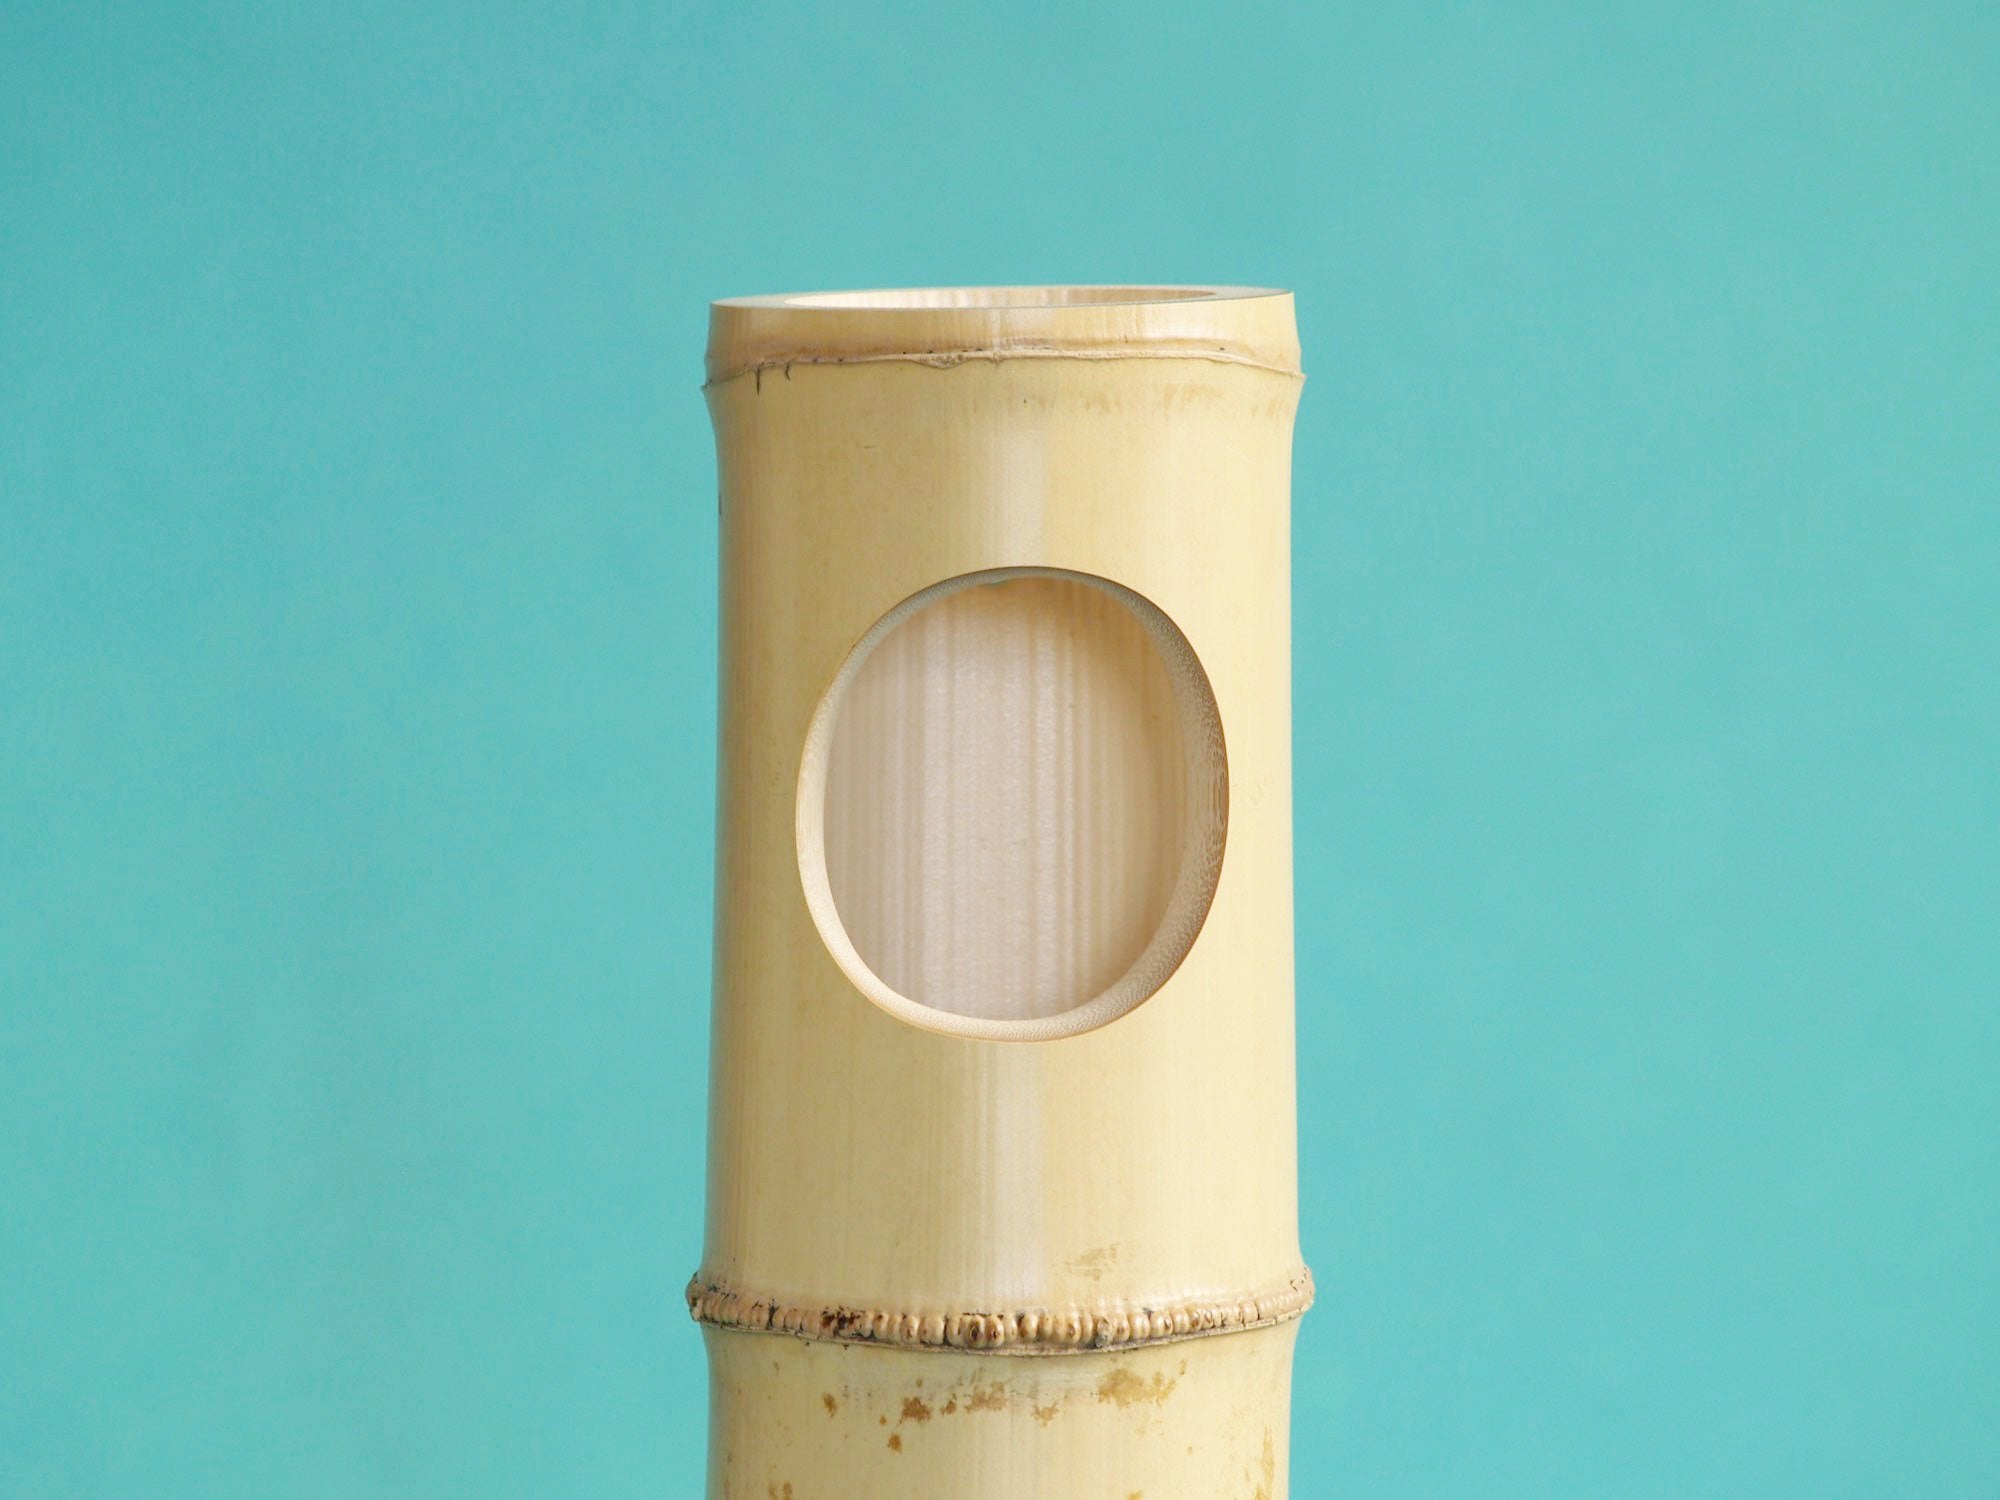 Takehanaire, vase en bambou pour la cérémonie du thé, Japon (Ère Shōwa)..Takehanaire, Bamboo flower vase for tea ceremony chabana, Japan (Shōwa era)